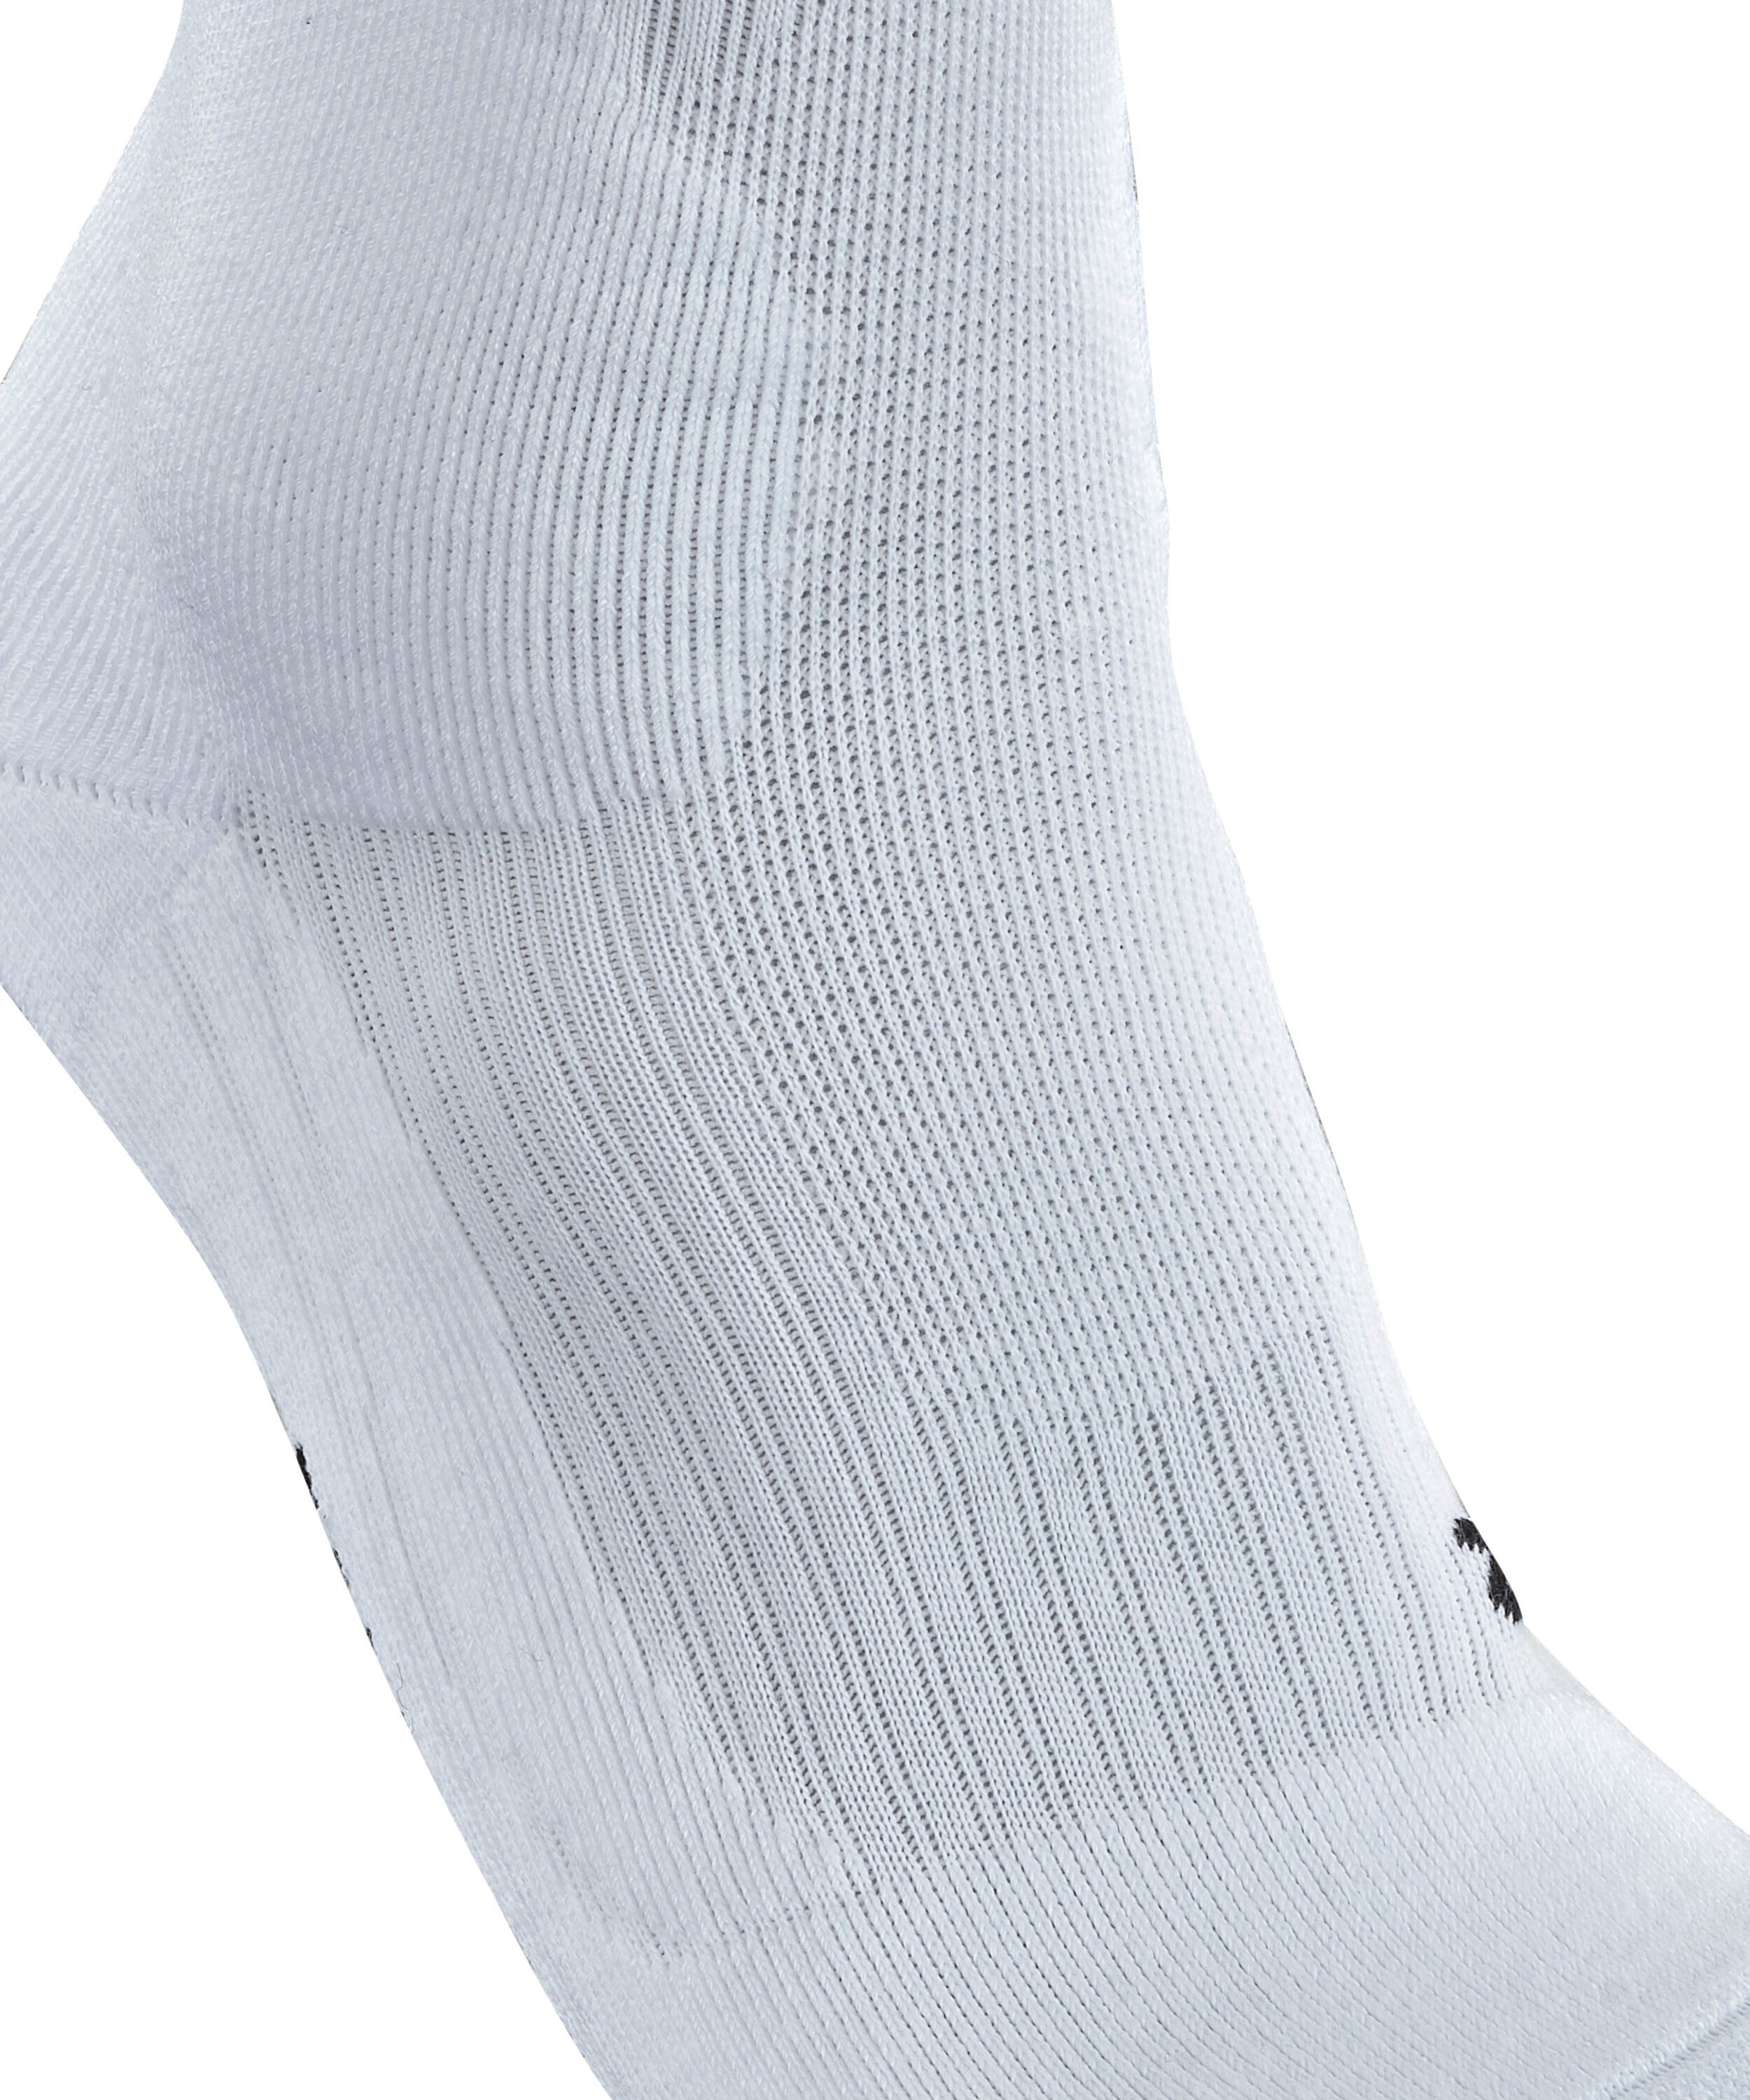 FALKE Tennissocken TE2 white (1-Paar) Hartplätze (2000) Socken Stabilisierende für